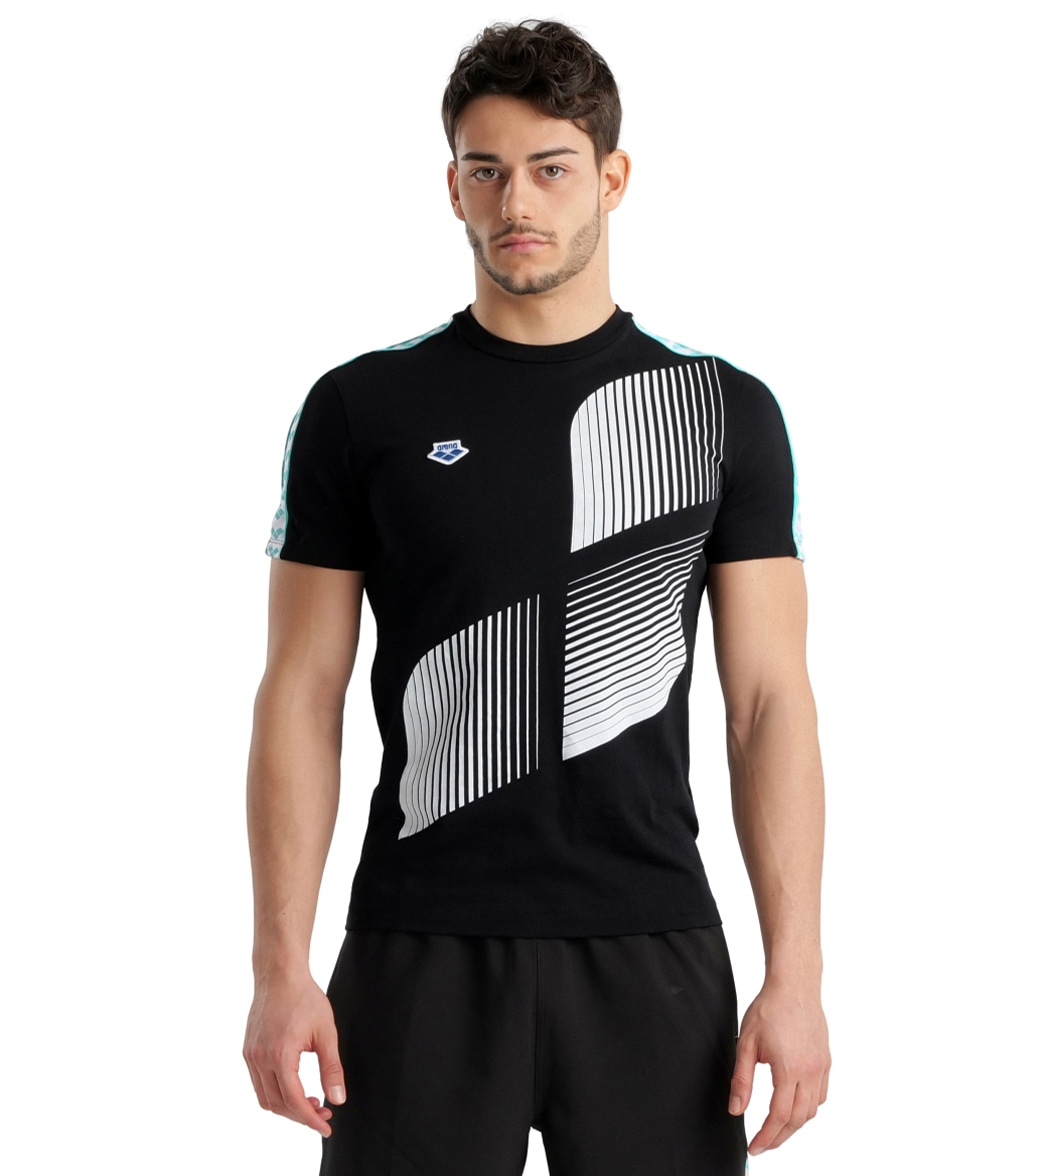 Arena Men's Logo Team Tee Shirt - Black/White/Blue Diamond Large Cotton - Swimoutlet.com